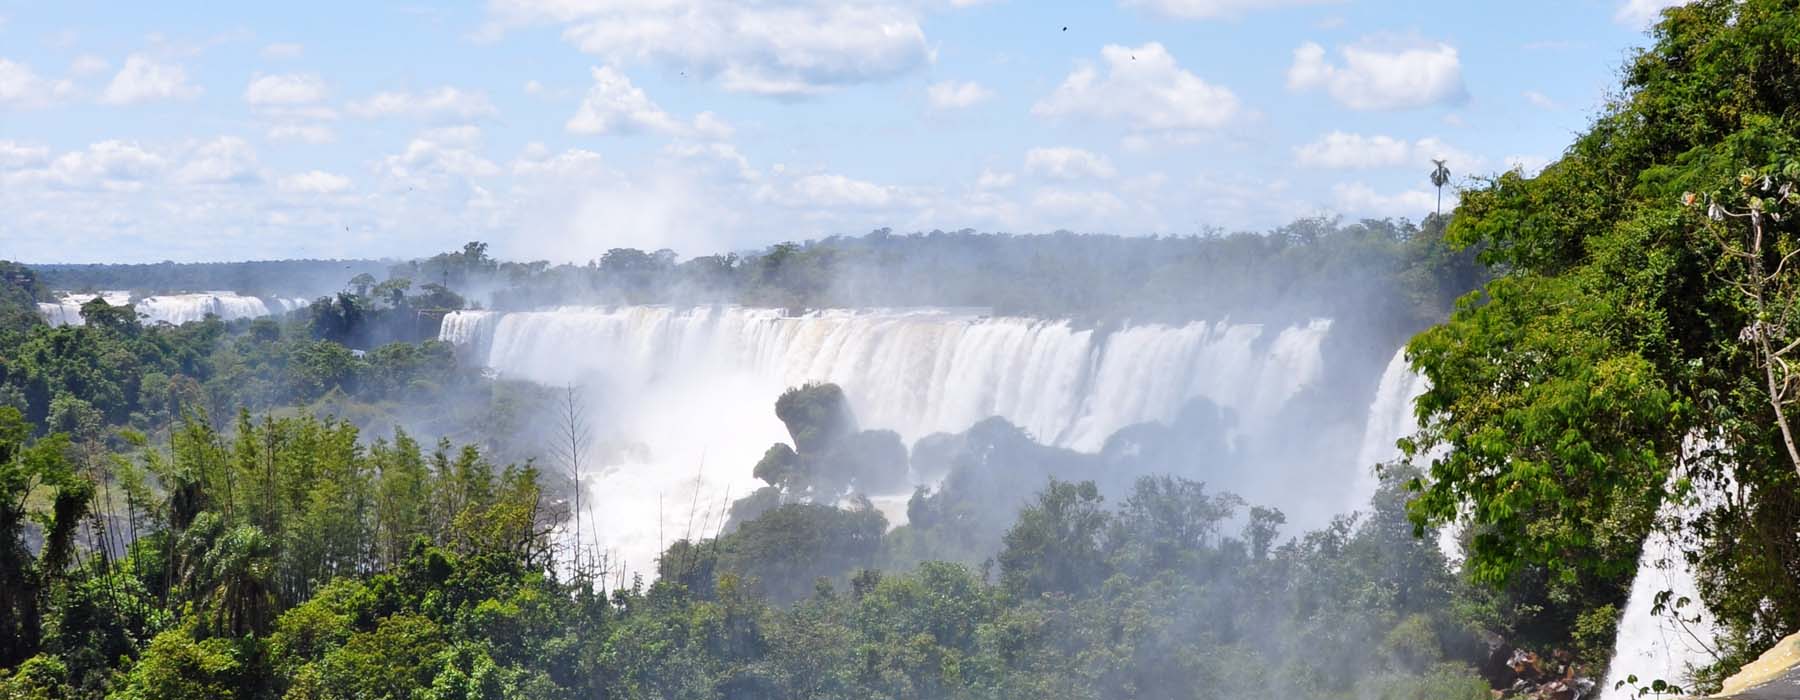 Iguacu Falls & the Ibera Wetlands<br class="hidden-md hidden-lg" /> Holidays